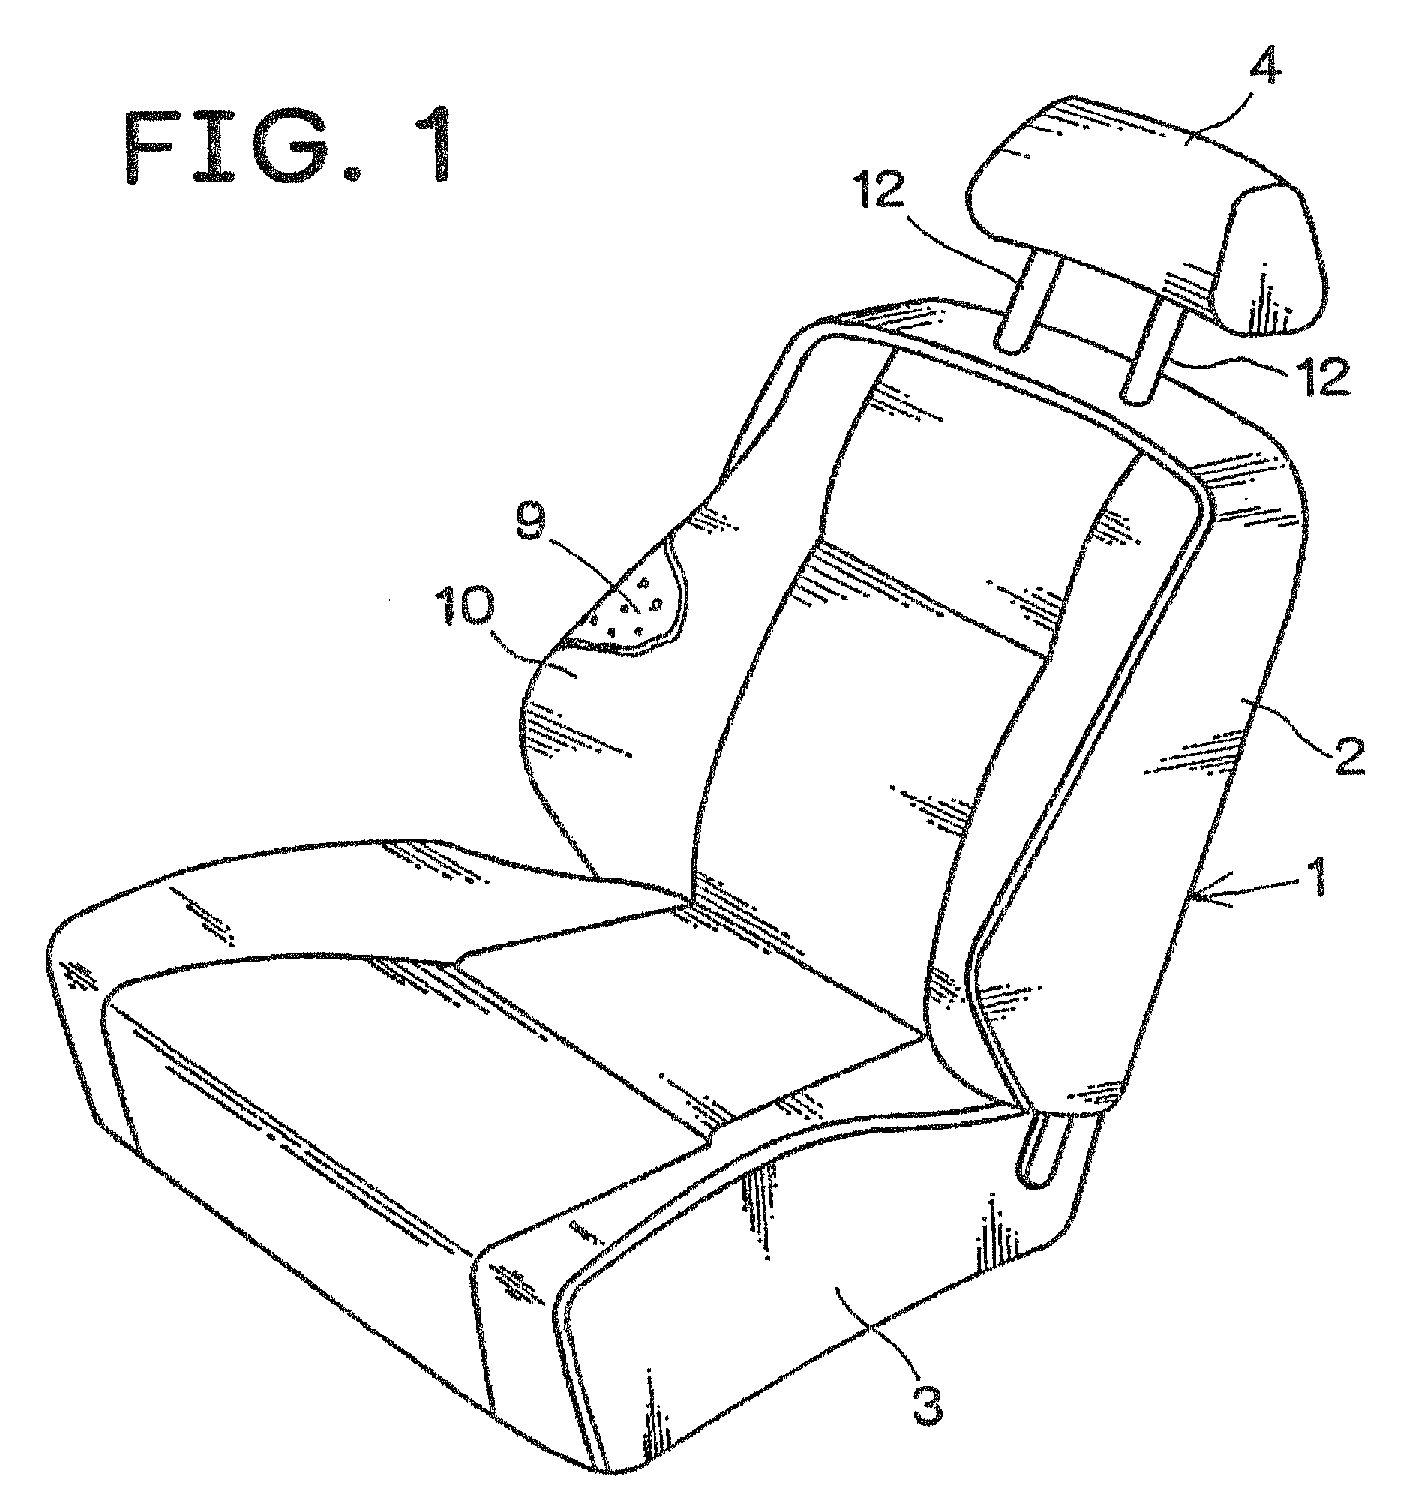 Active headrest mechanism for vehicle seat